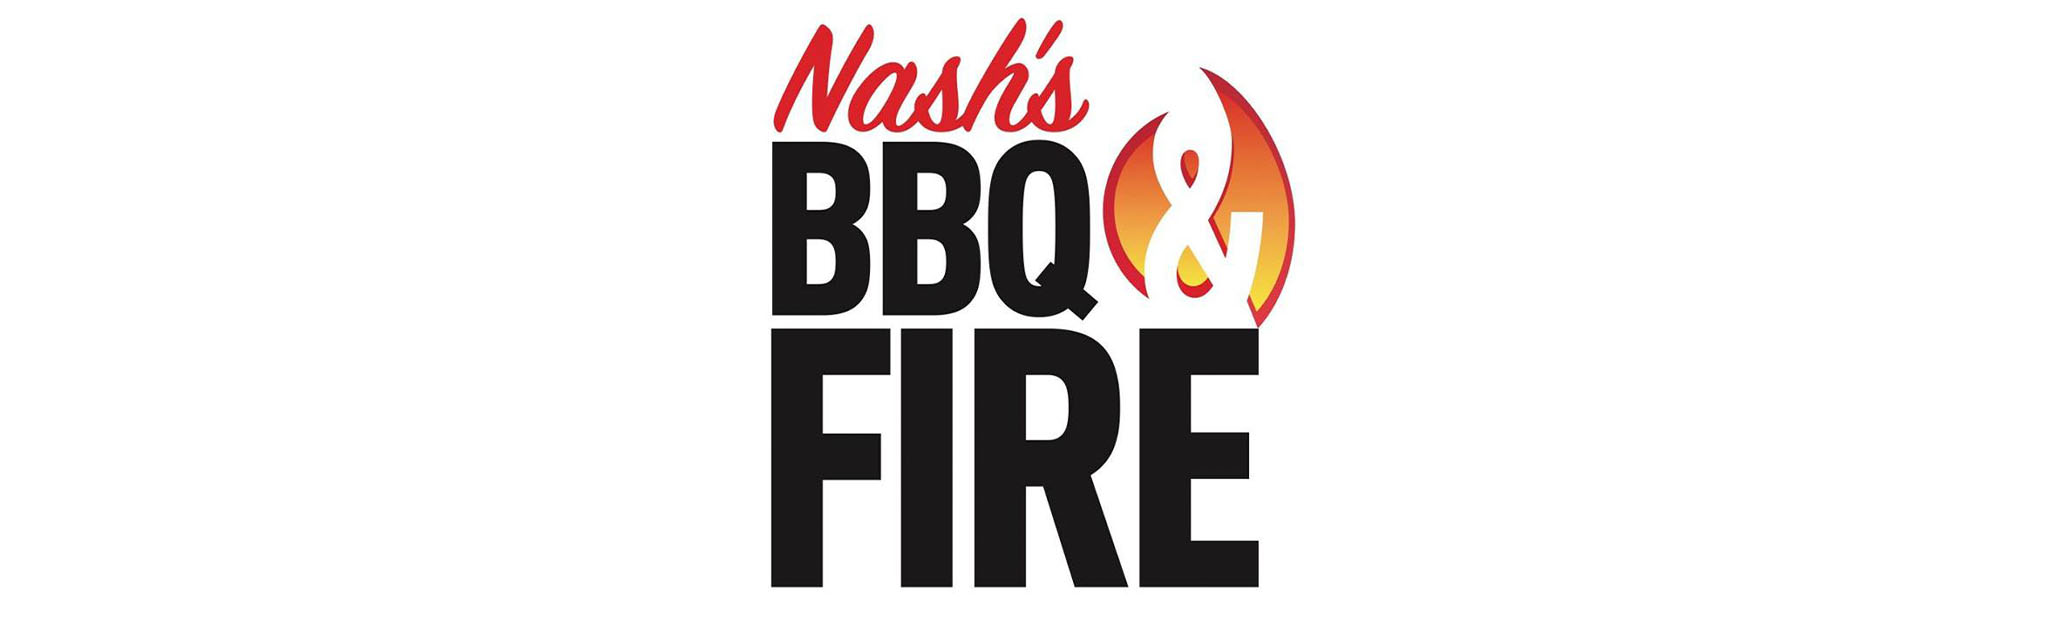 Nash’s BBQ & Fire 